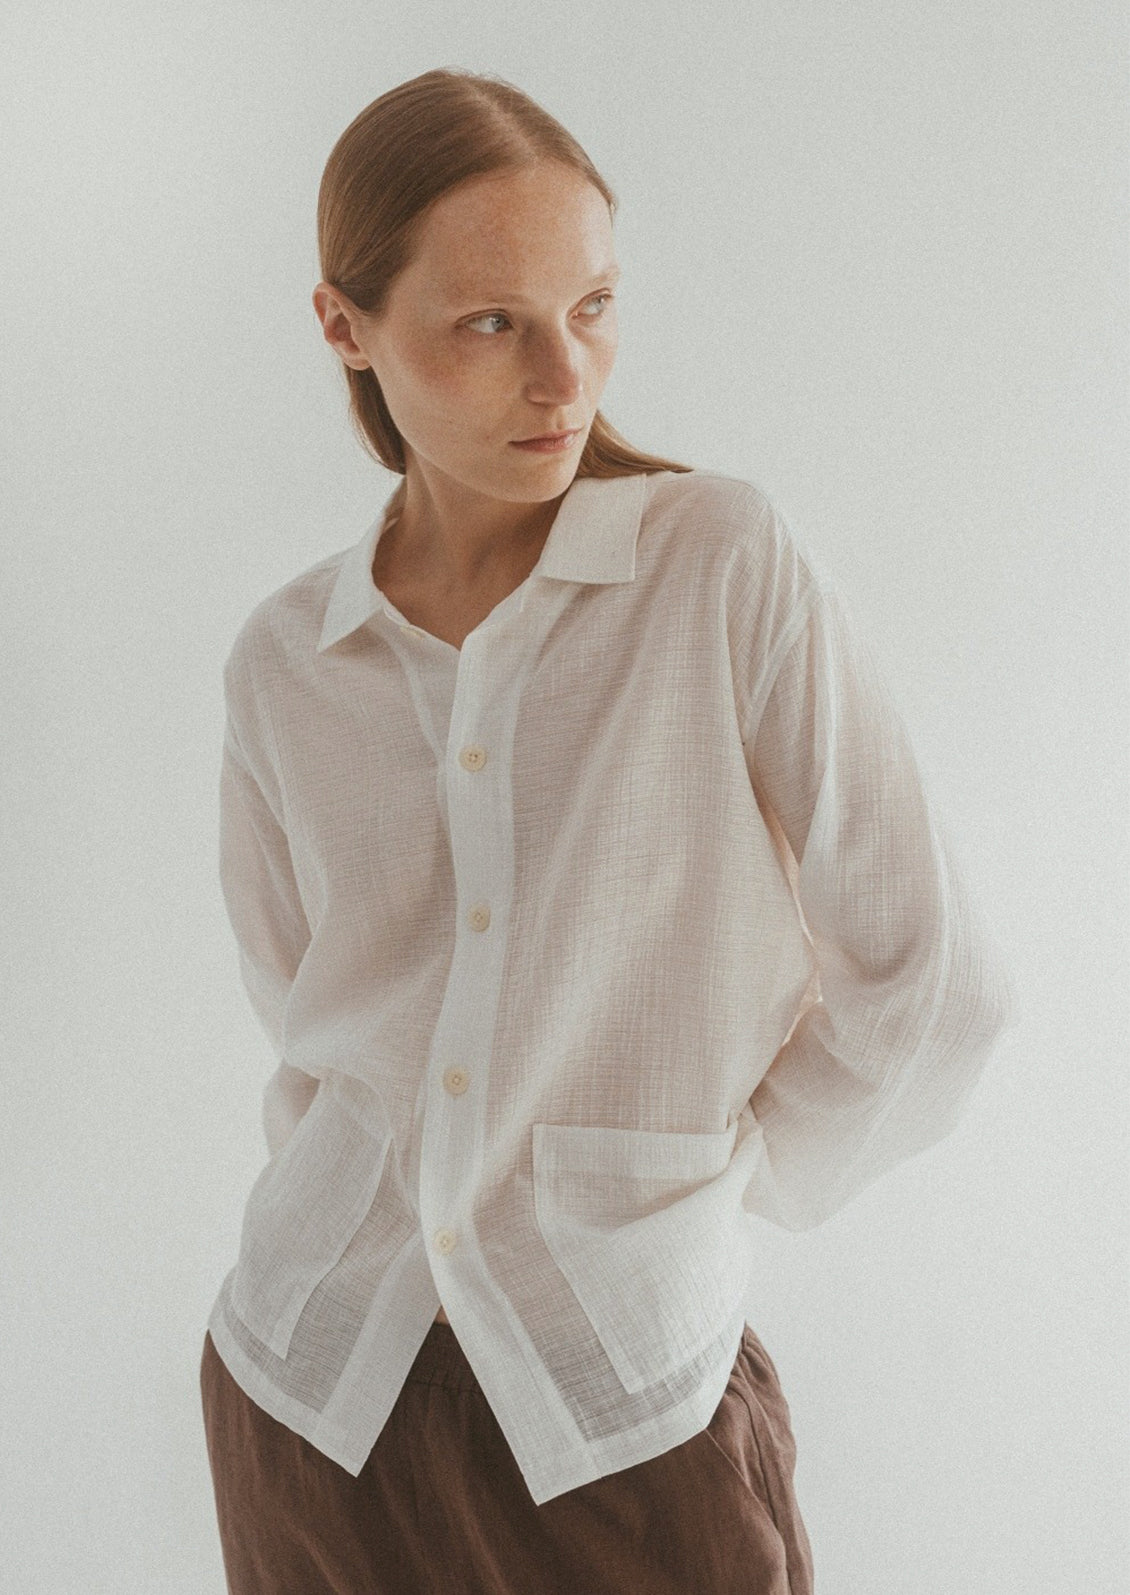 A woman wearing a semi-sheer, gauze-textured white button front shirt.